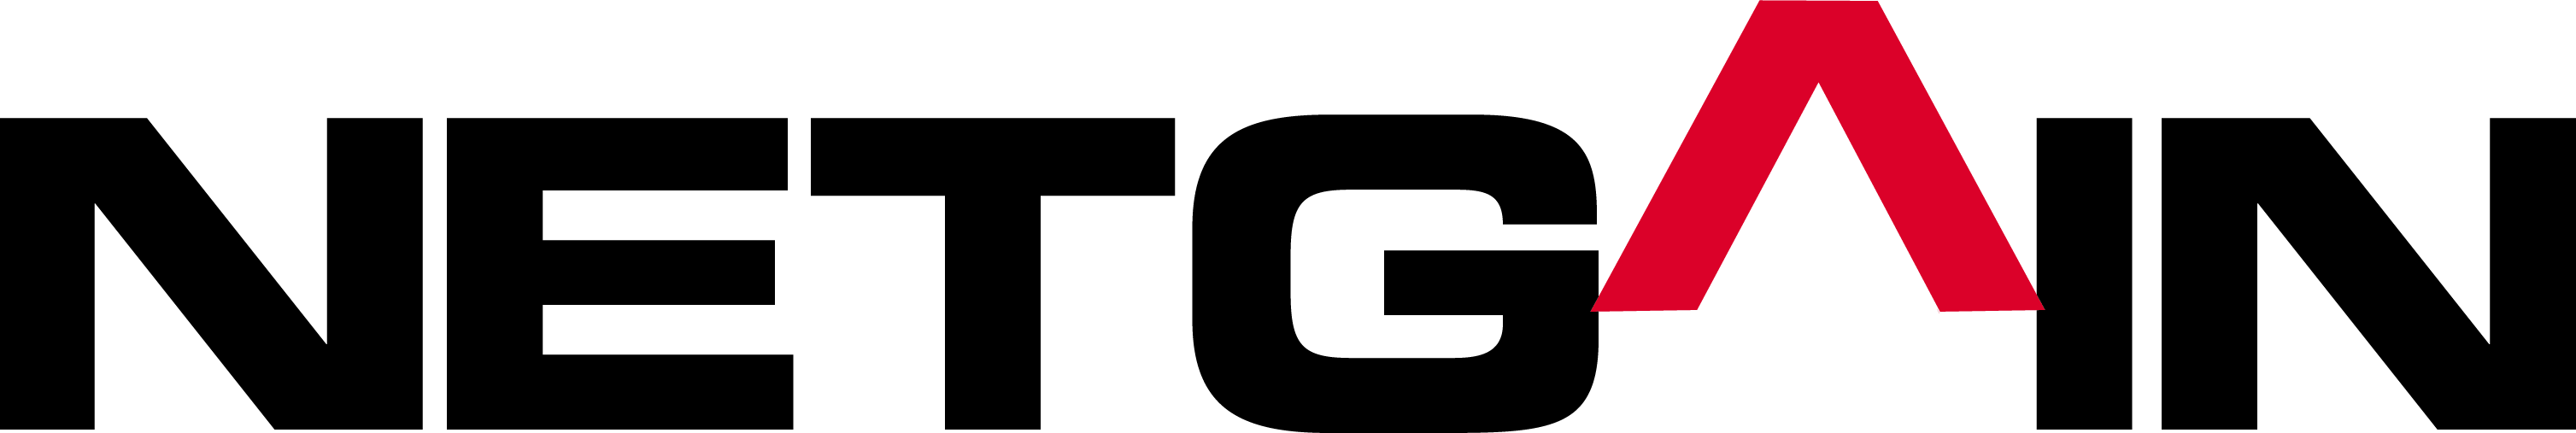 Netgain Logo